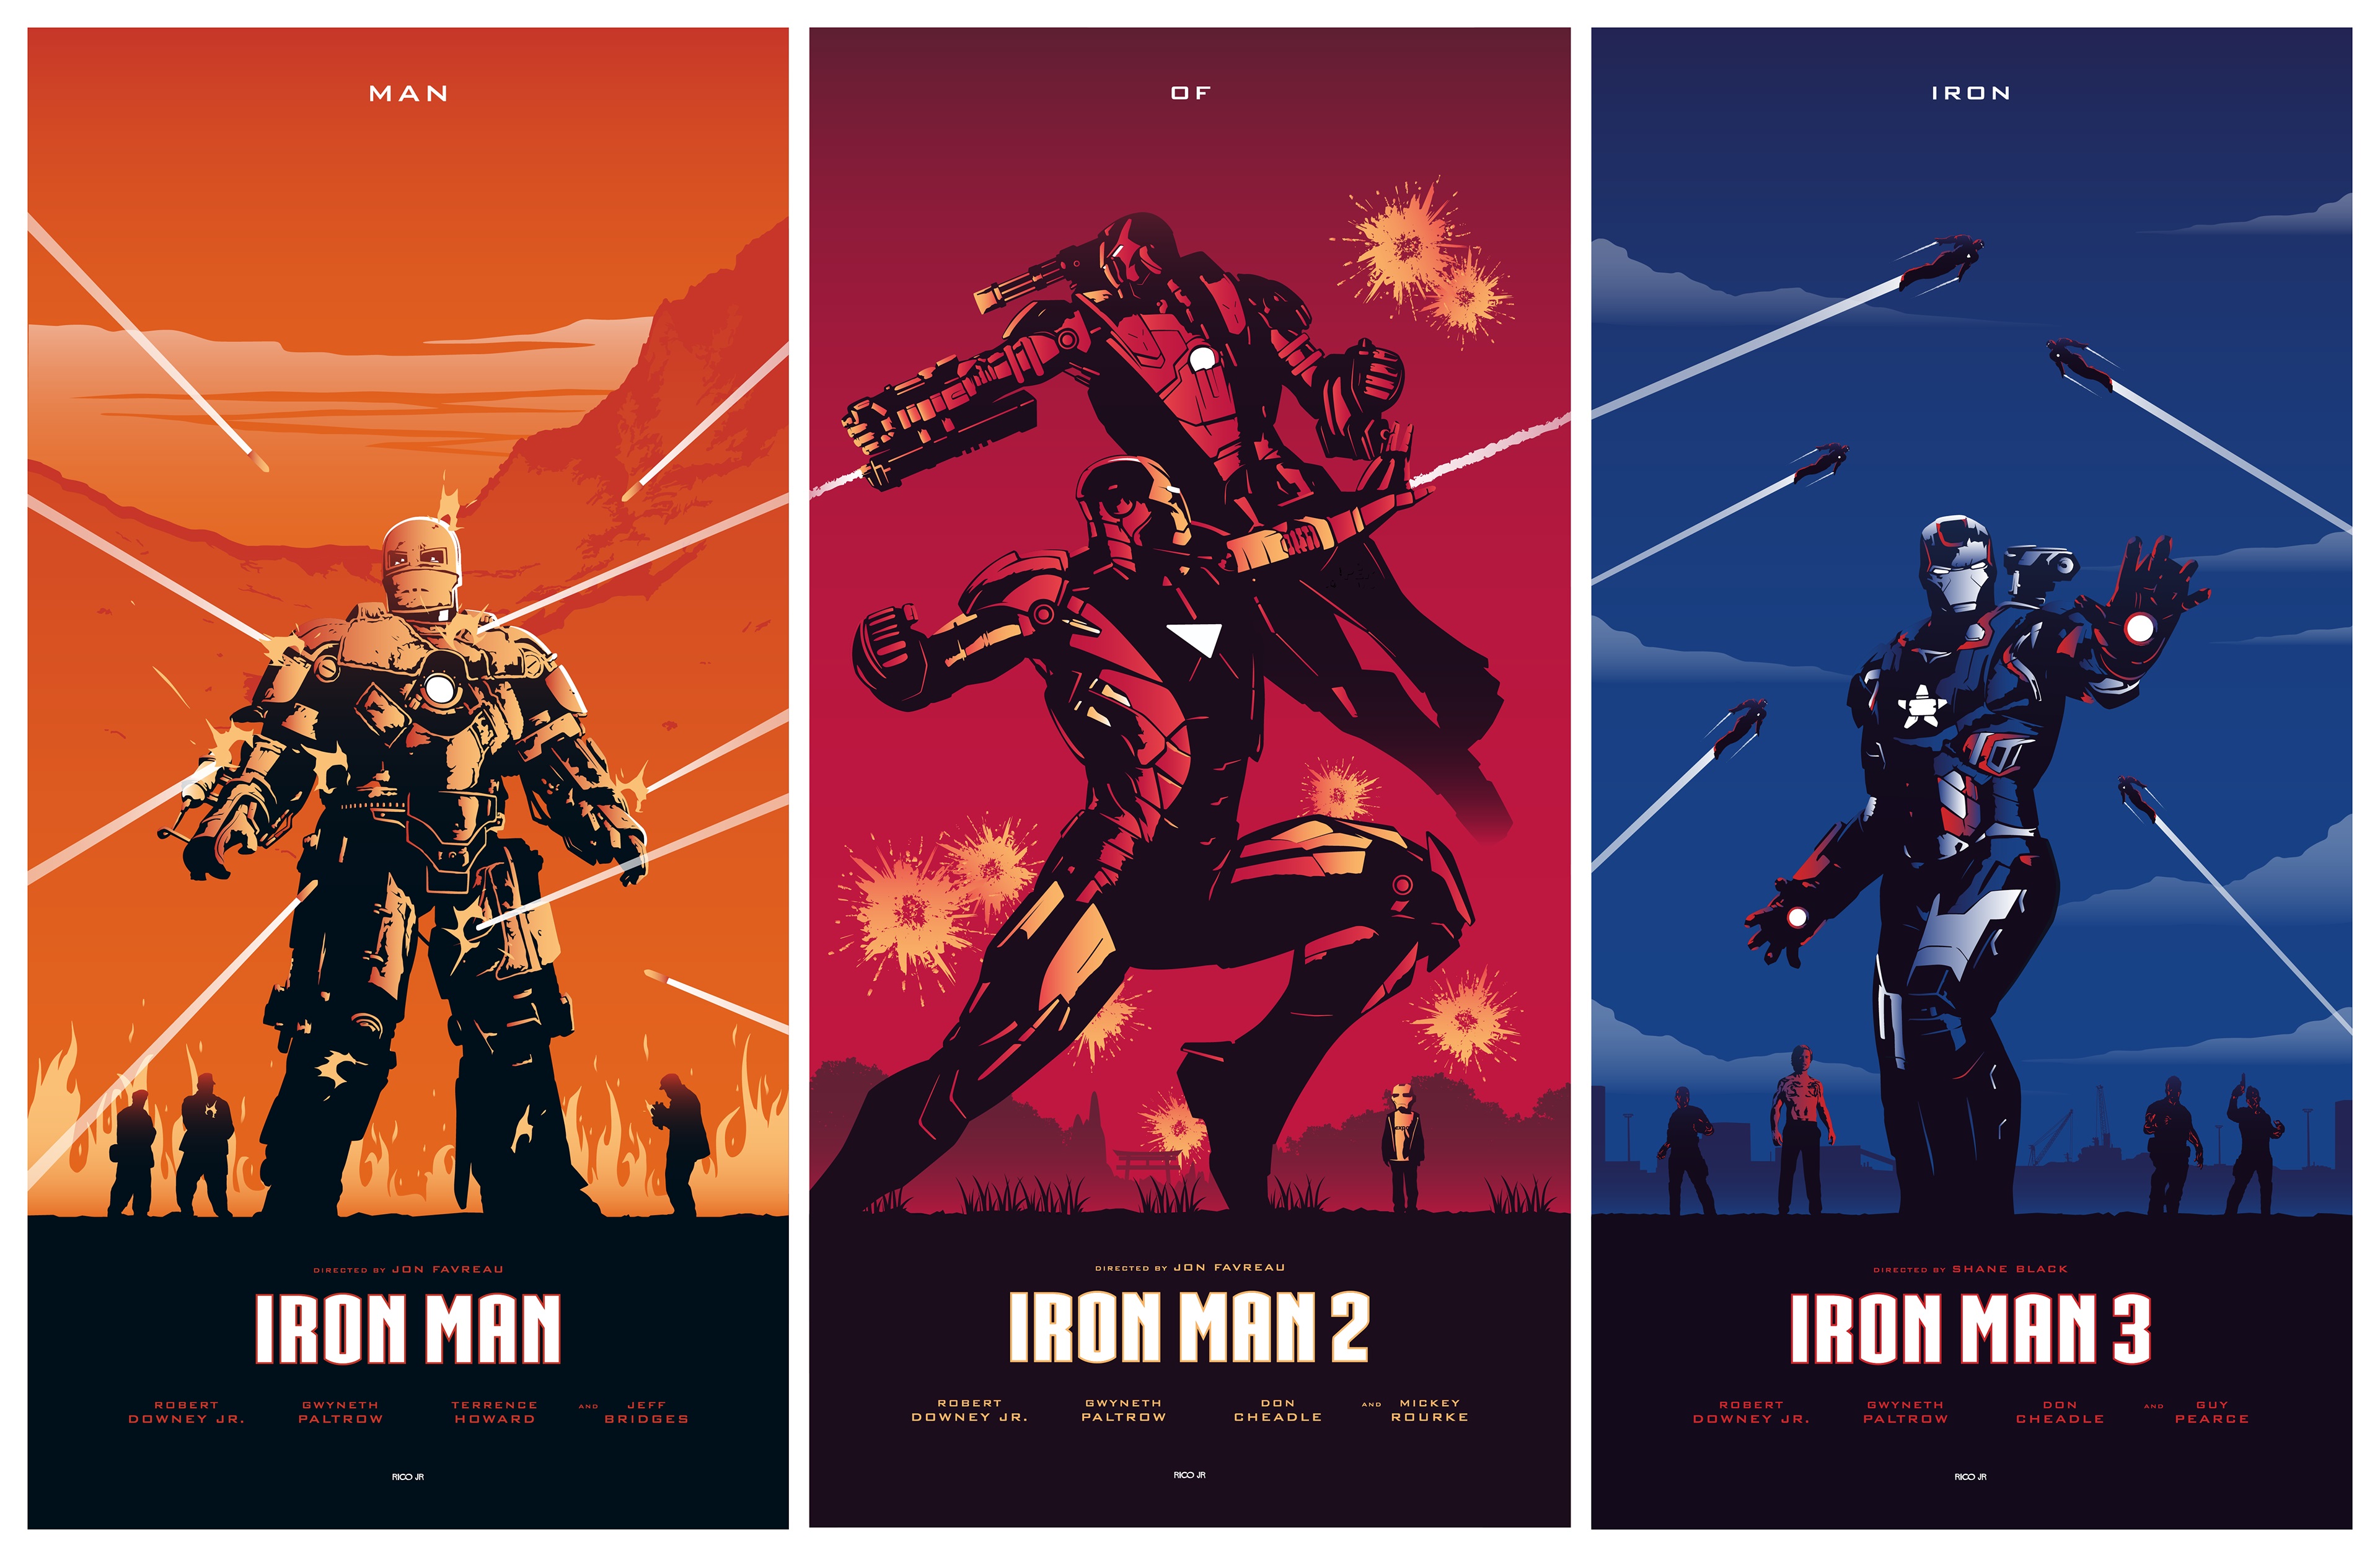 General 3840x2509 Iron Man movies movie poster poster collage Marvel Cinematic Universe Marvel Comics superhero singer